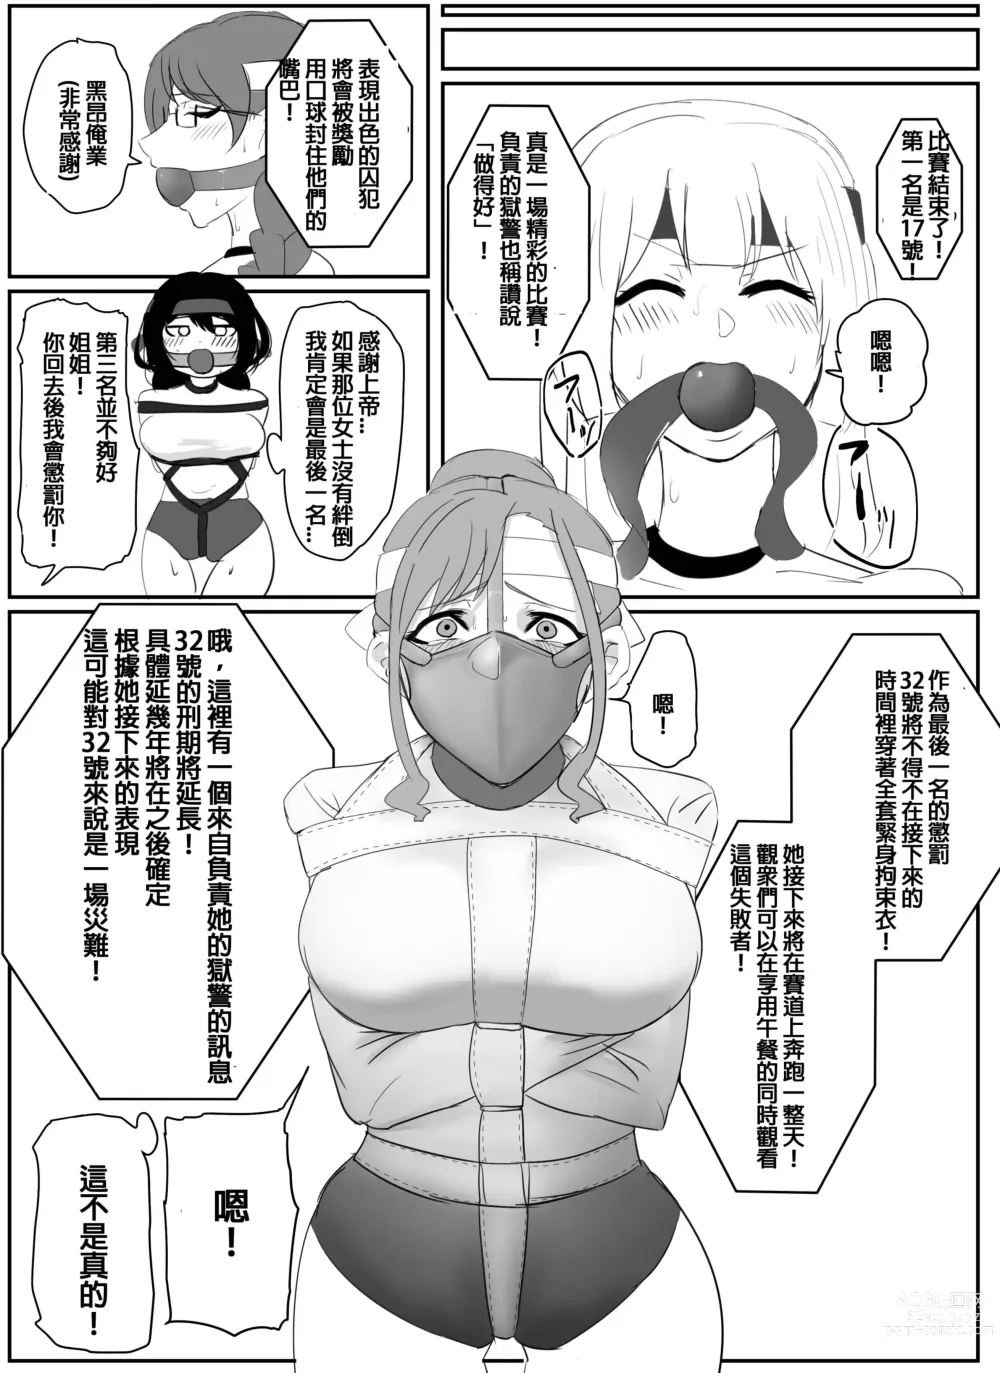 Page 19 of doujinshi 佳奈美囚人運動會!